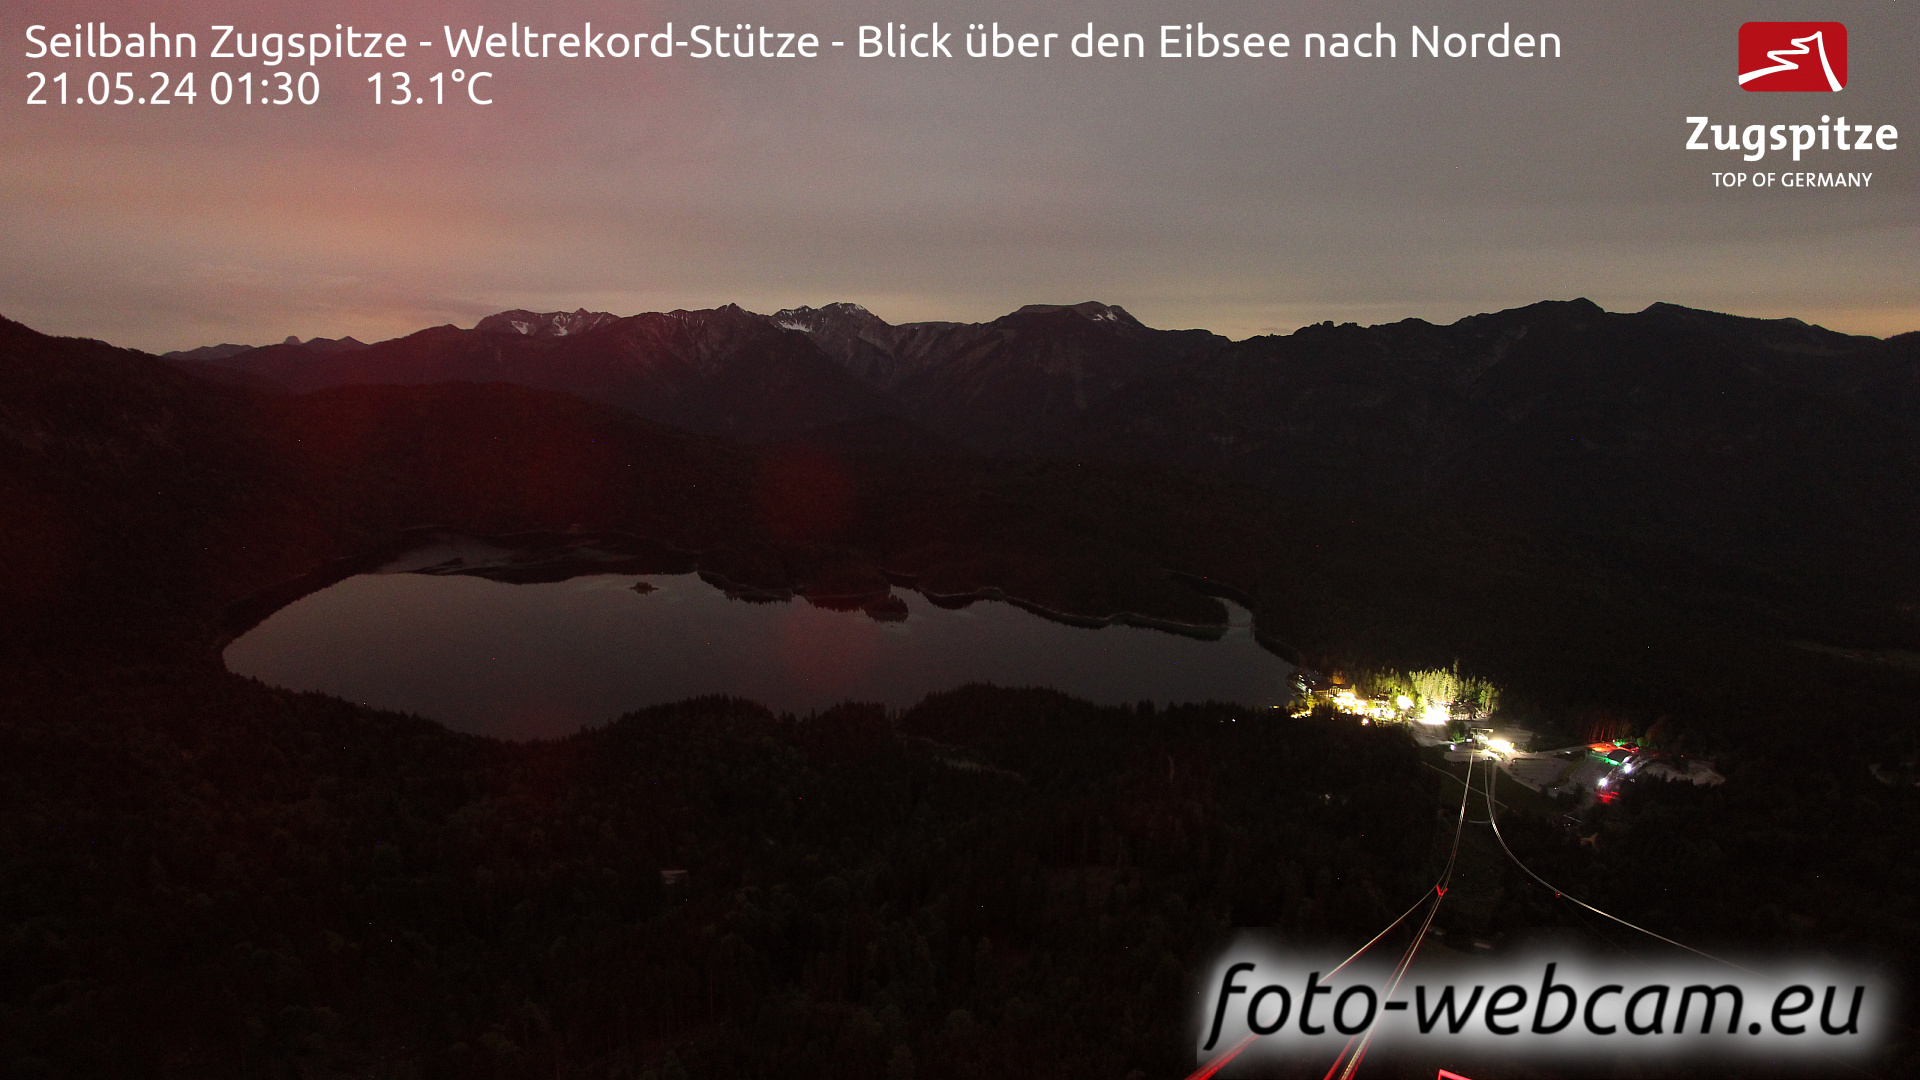 Zugspitze Mo. 01:49